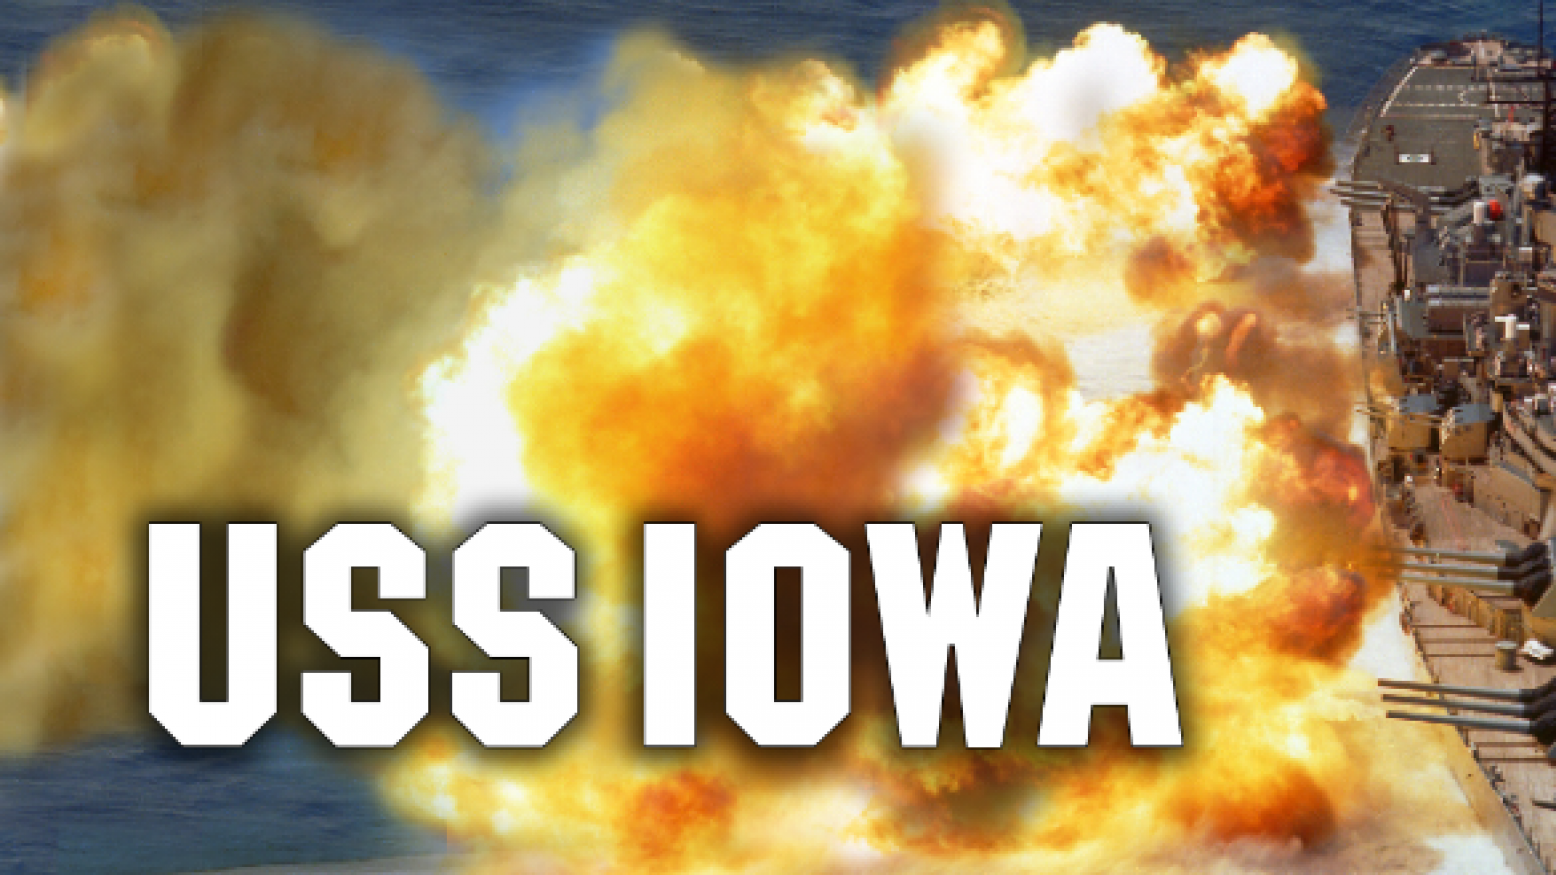 Battleship uss Iowa with fire